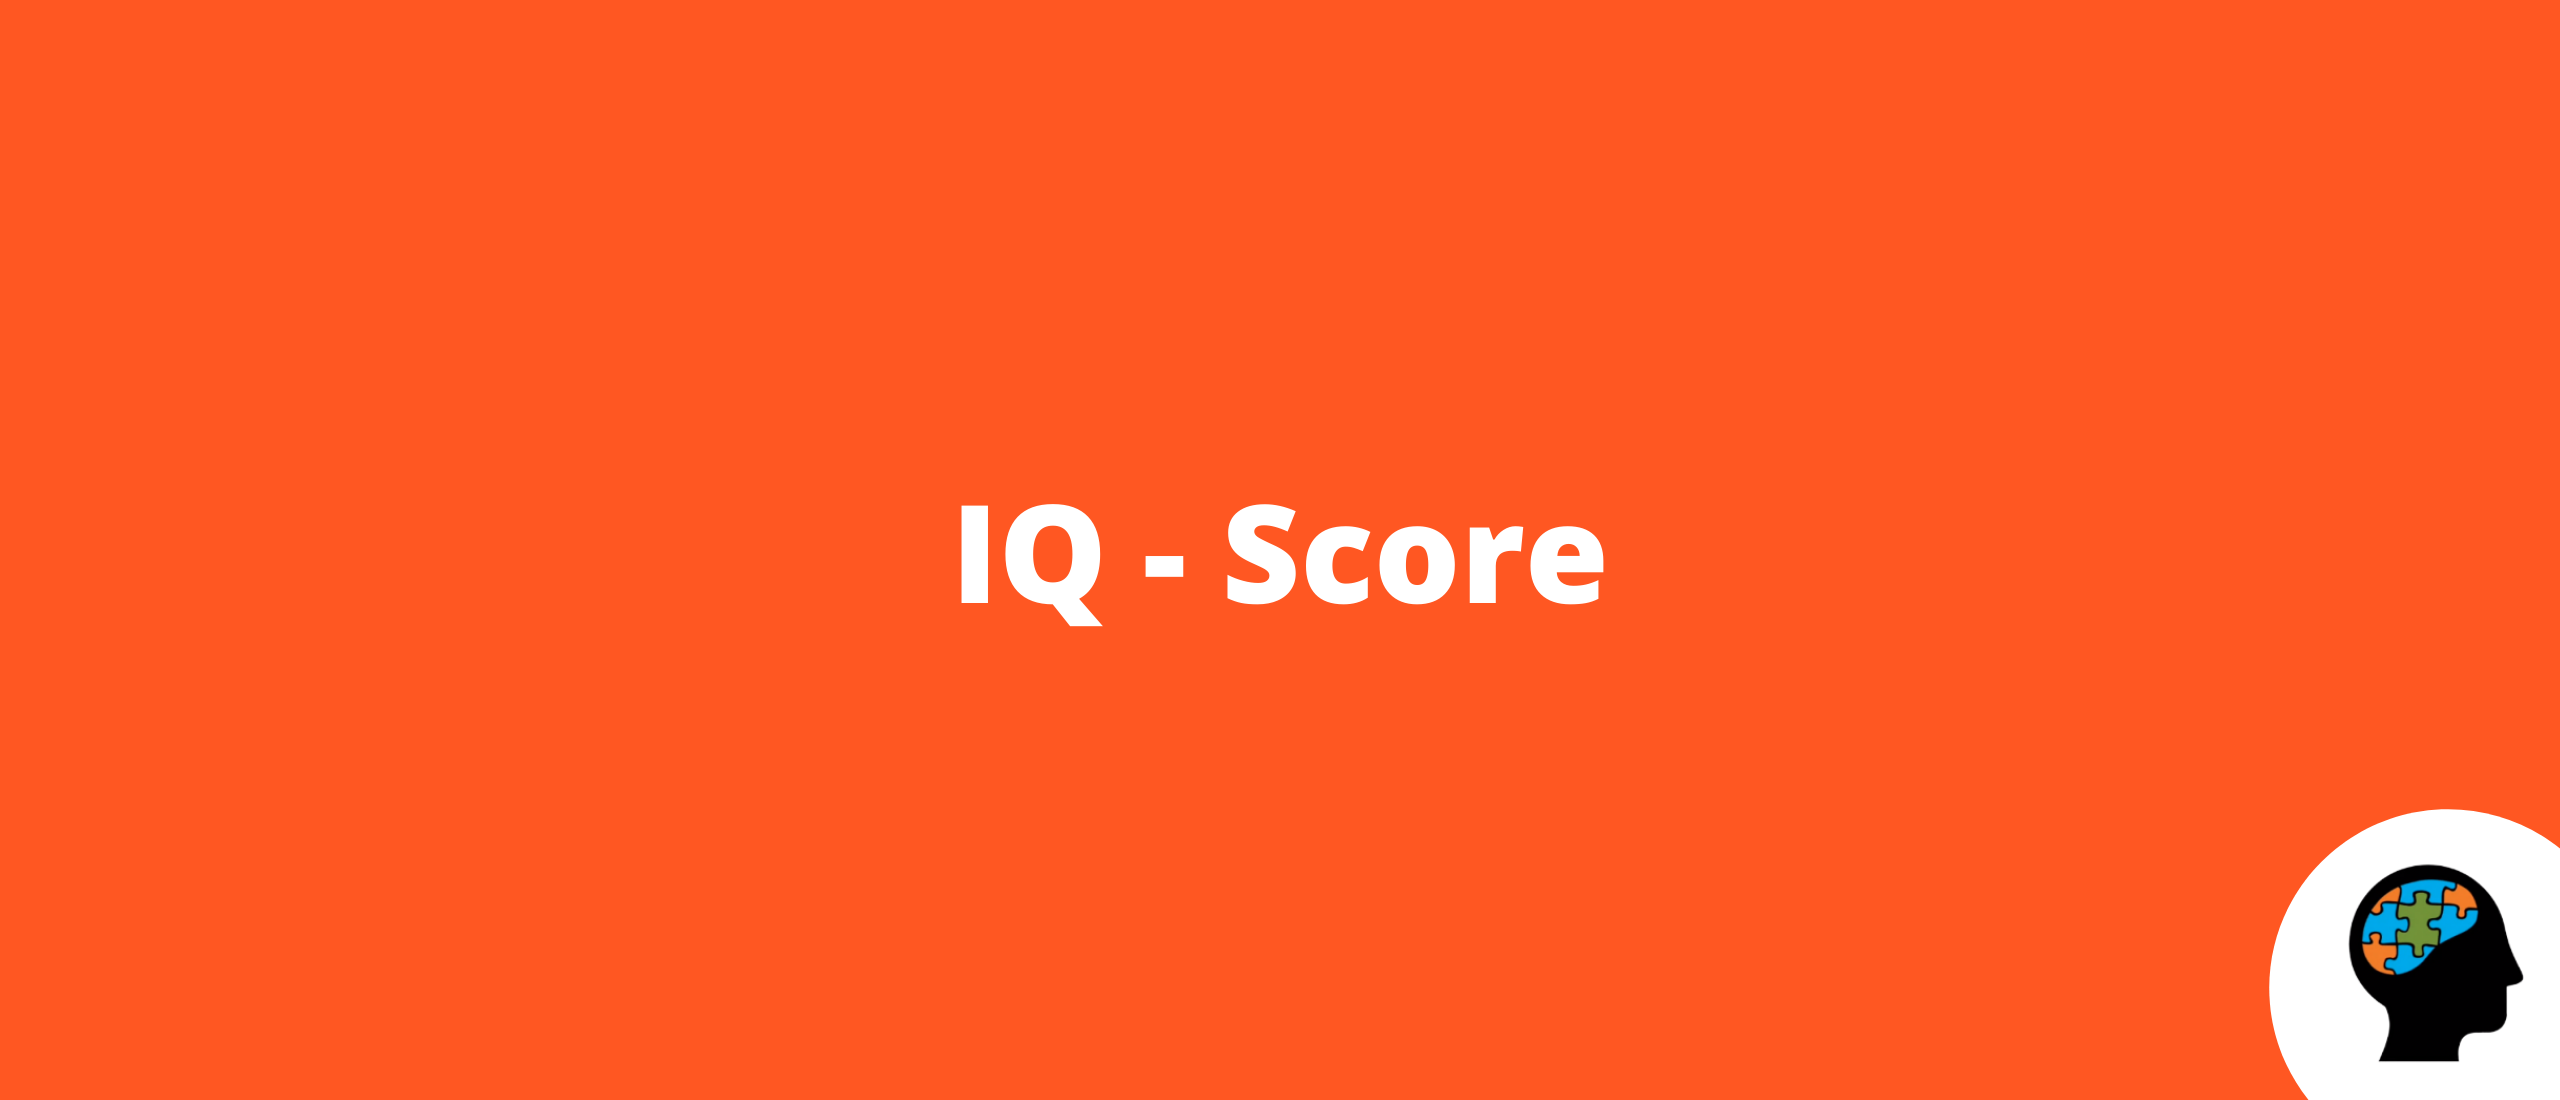 IQ - score